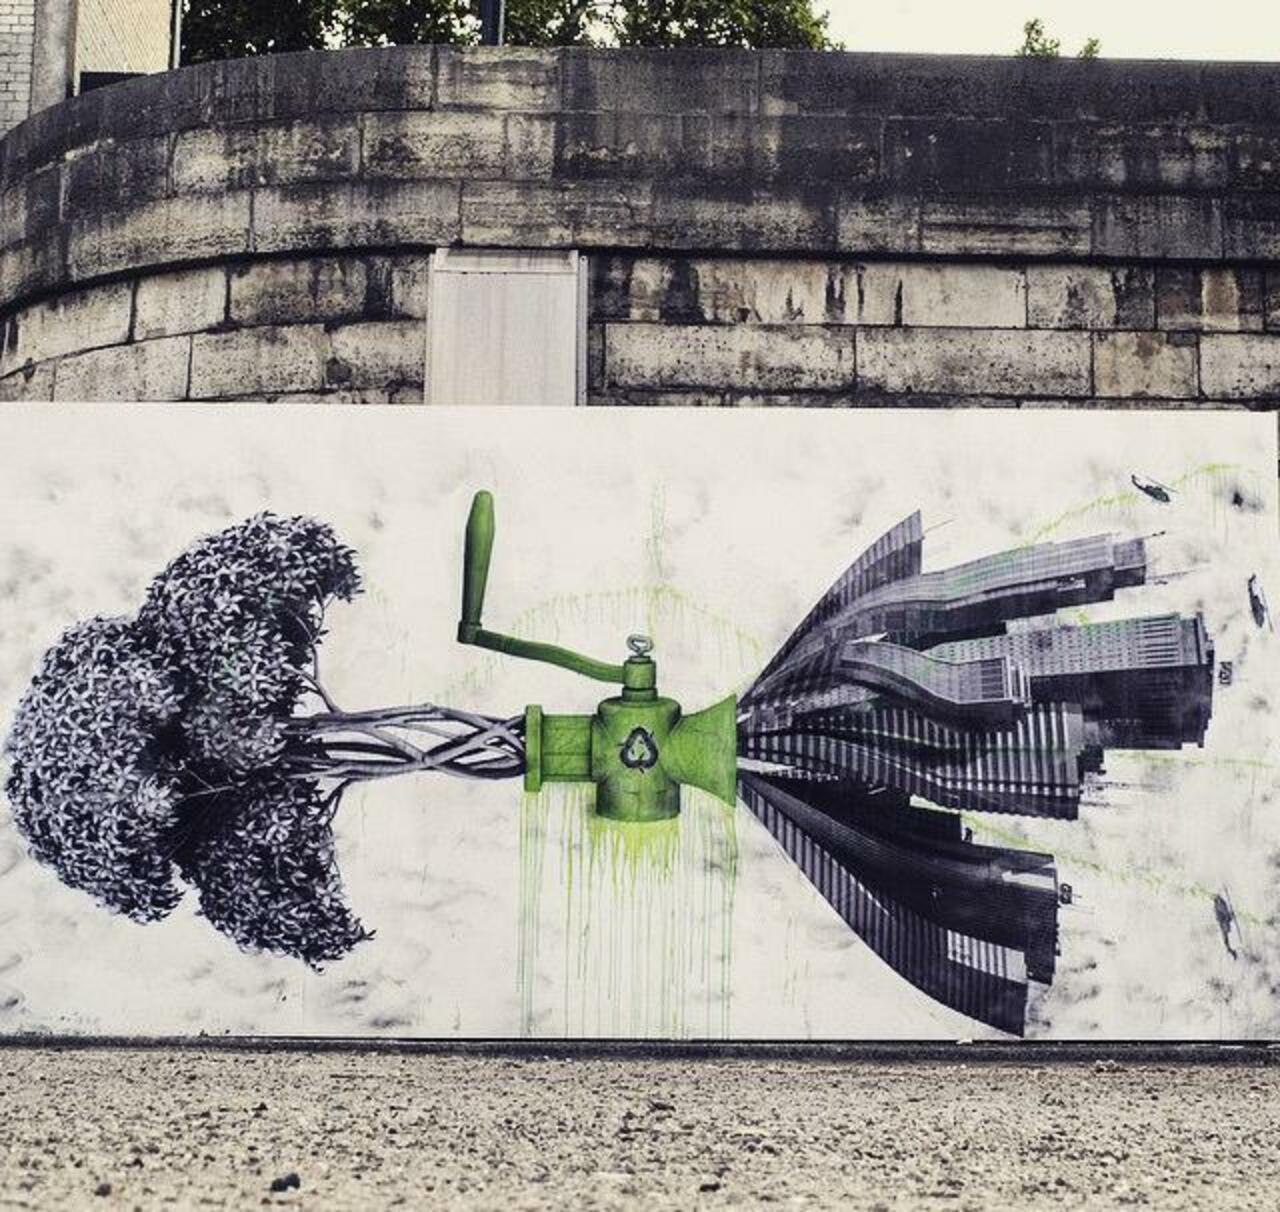 Street Art by Ludo

#art #arte #graffiti #streetart http://t.co/yA25PmkNp8